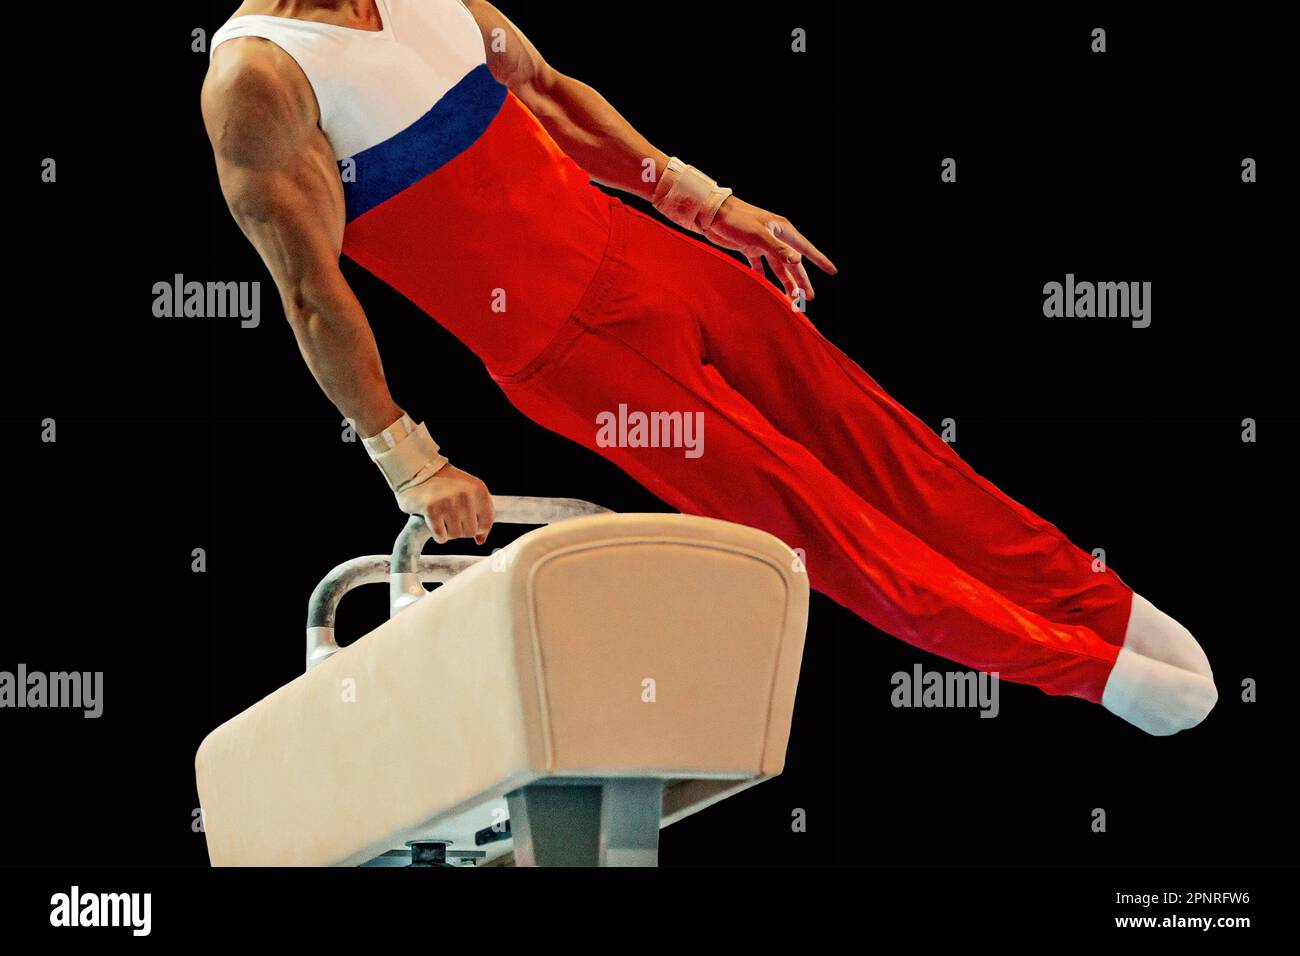 athlete gymnast exercise pommel horse in championship gymnastics artistic, summer sport games Stock Photo